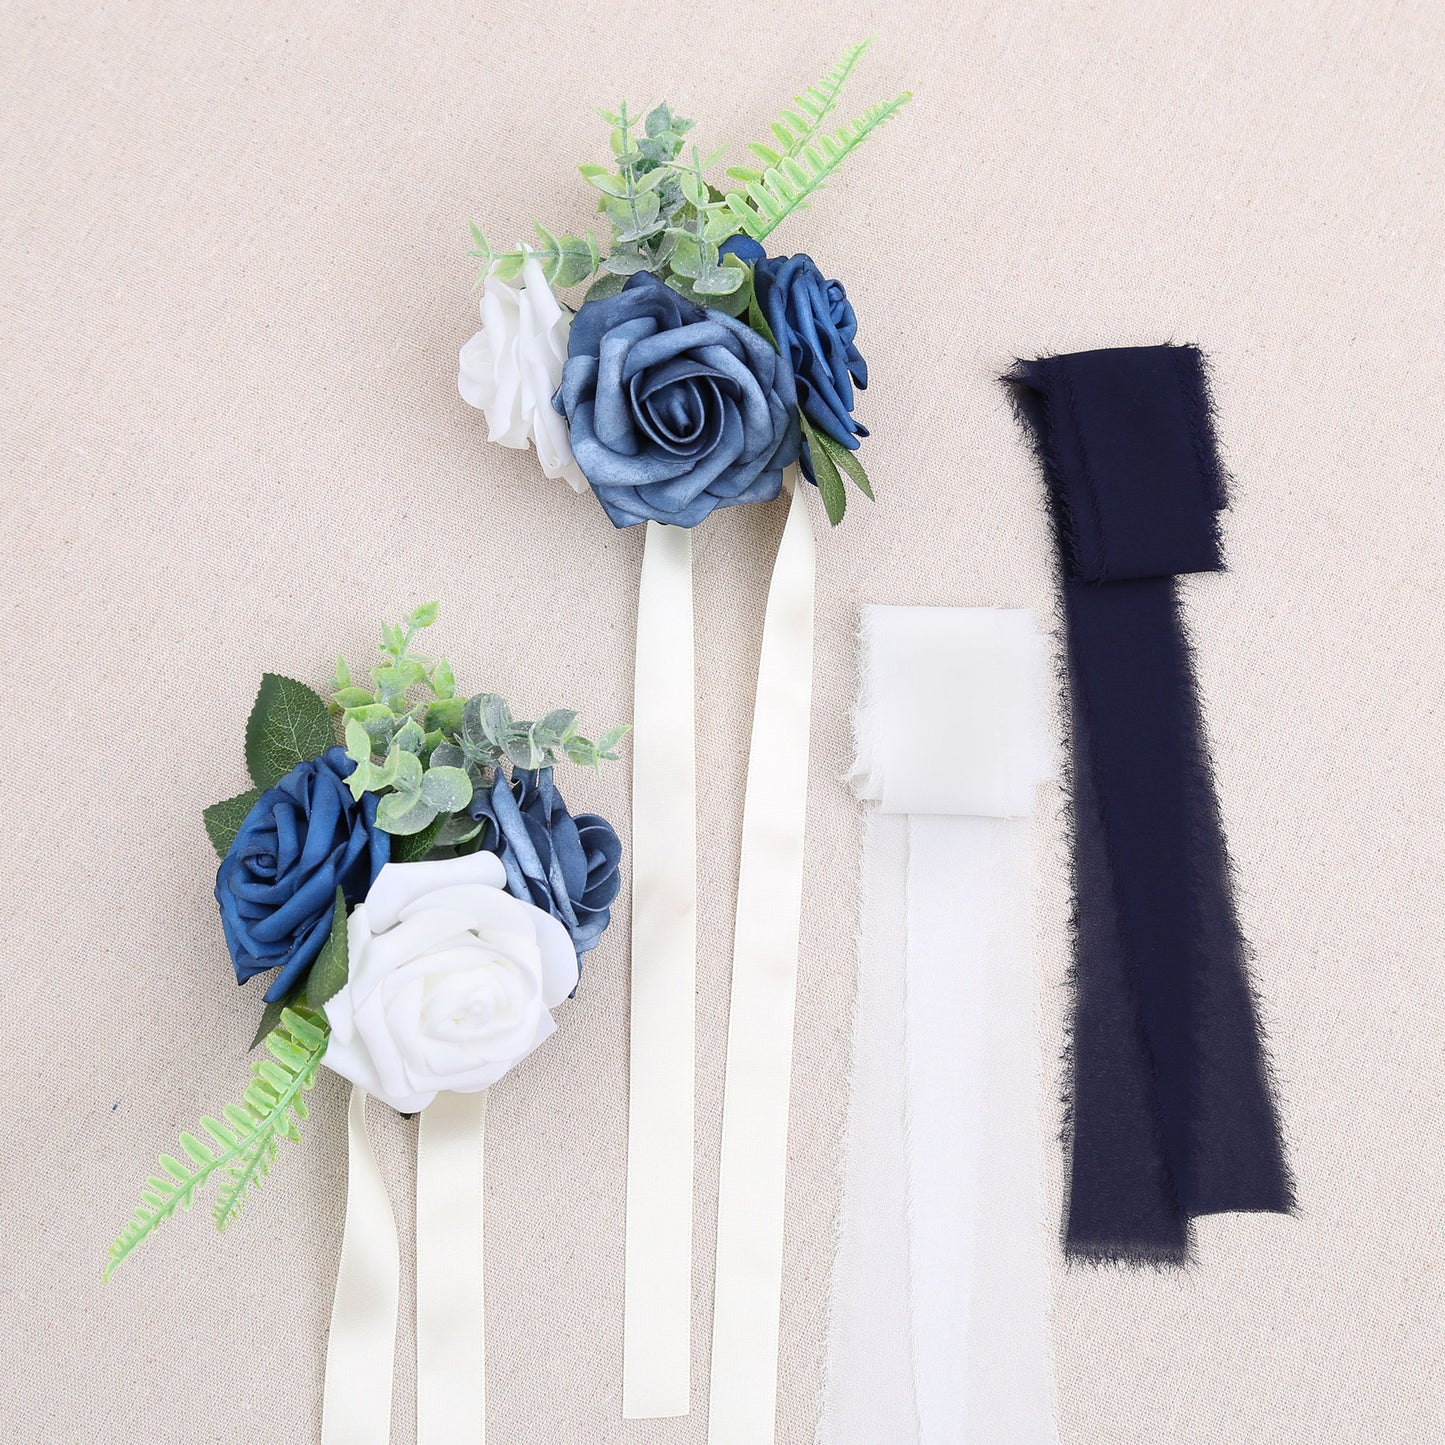 Faneya 12pcs Blue White Floral Wedding Flower Artificial Flowers